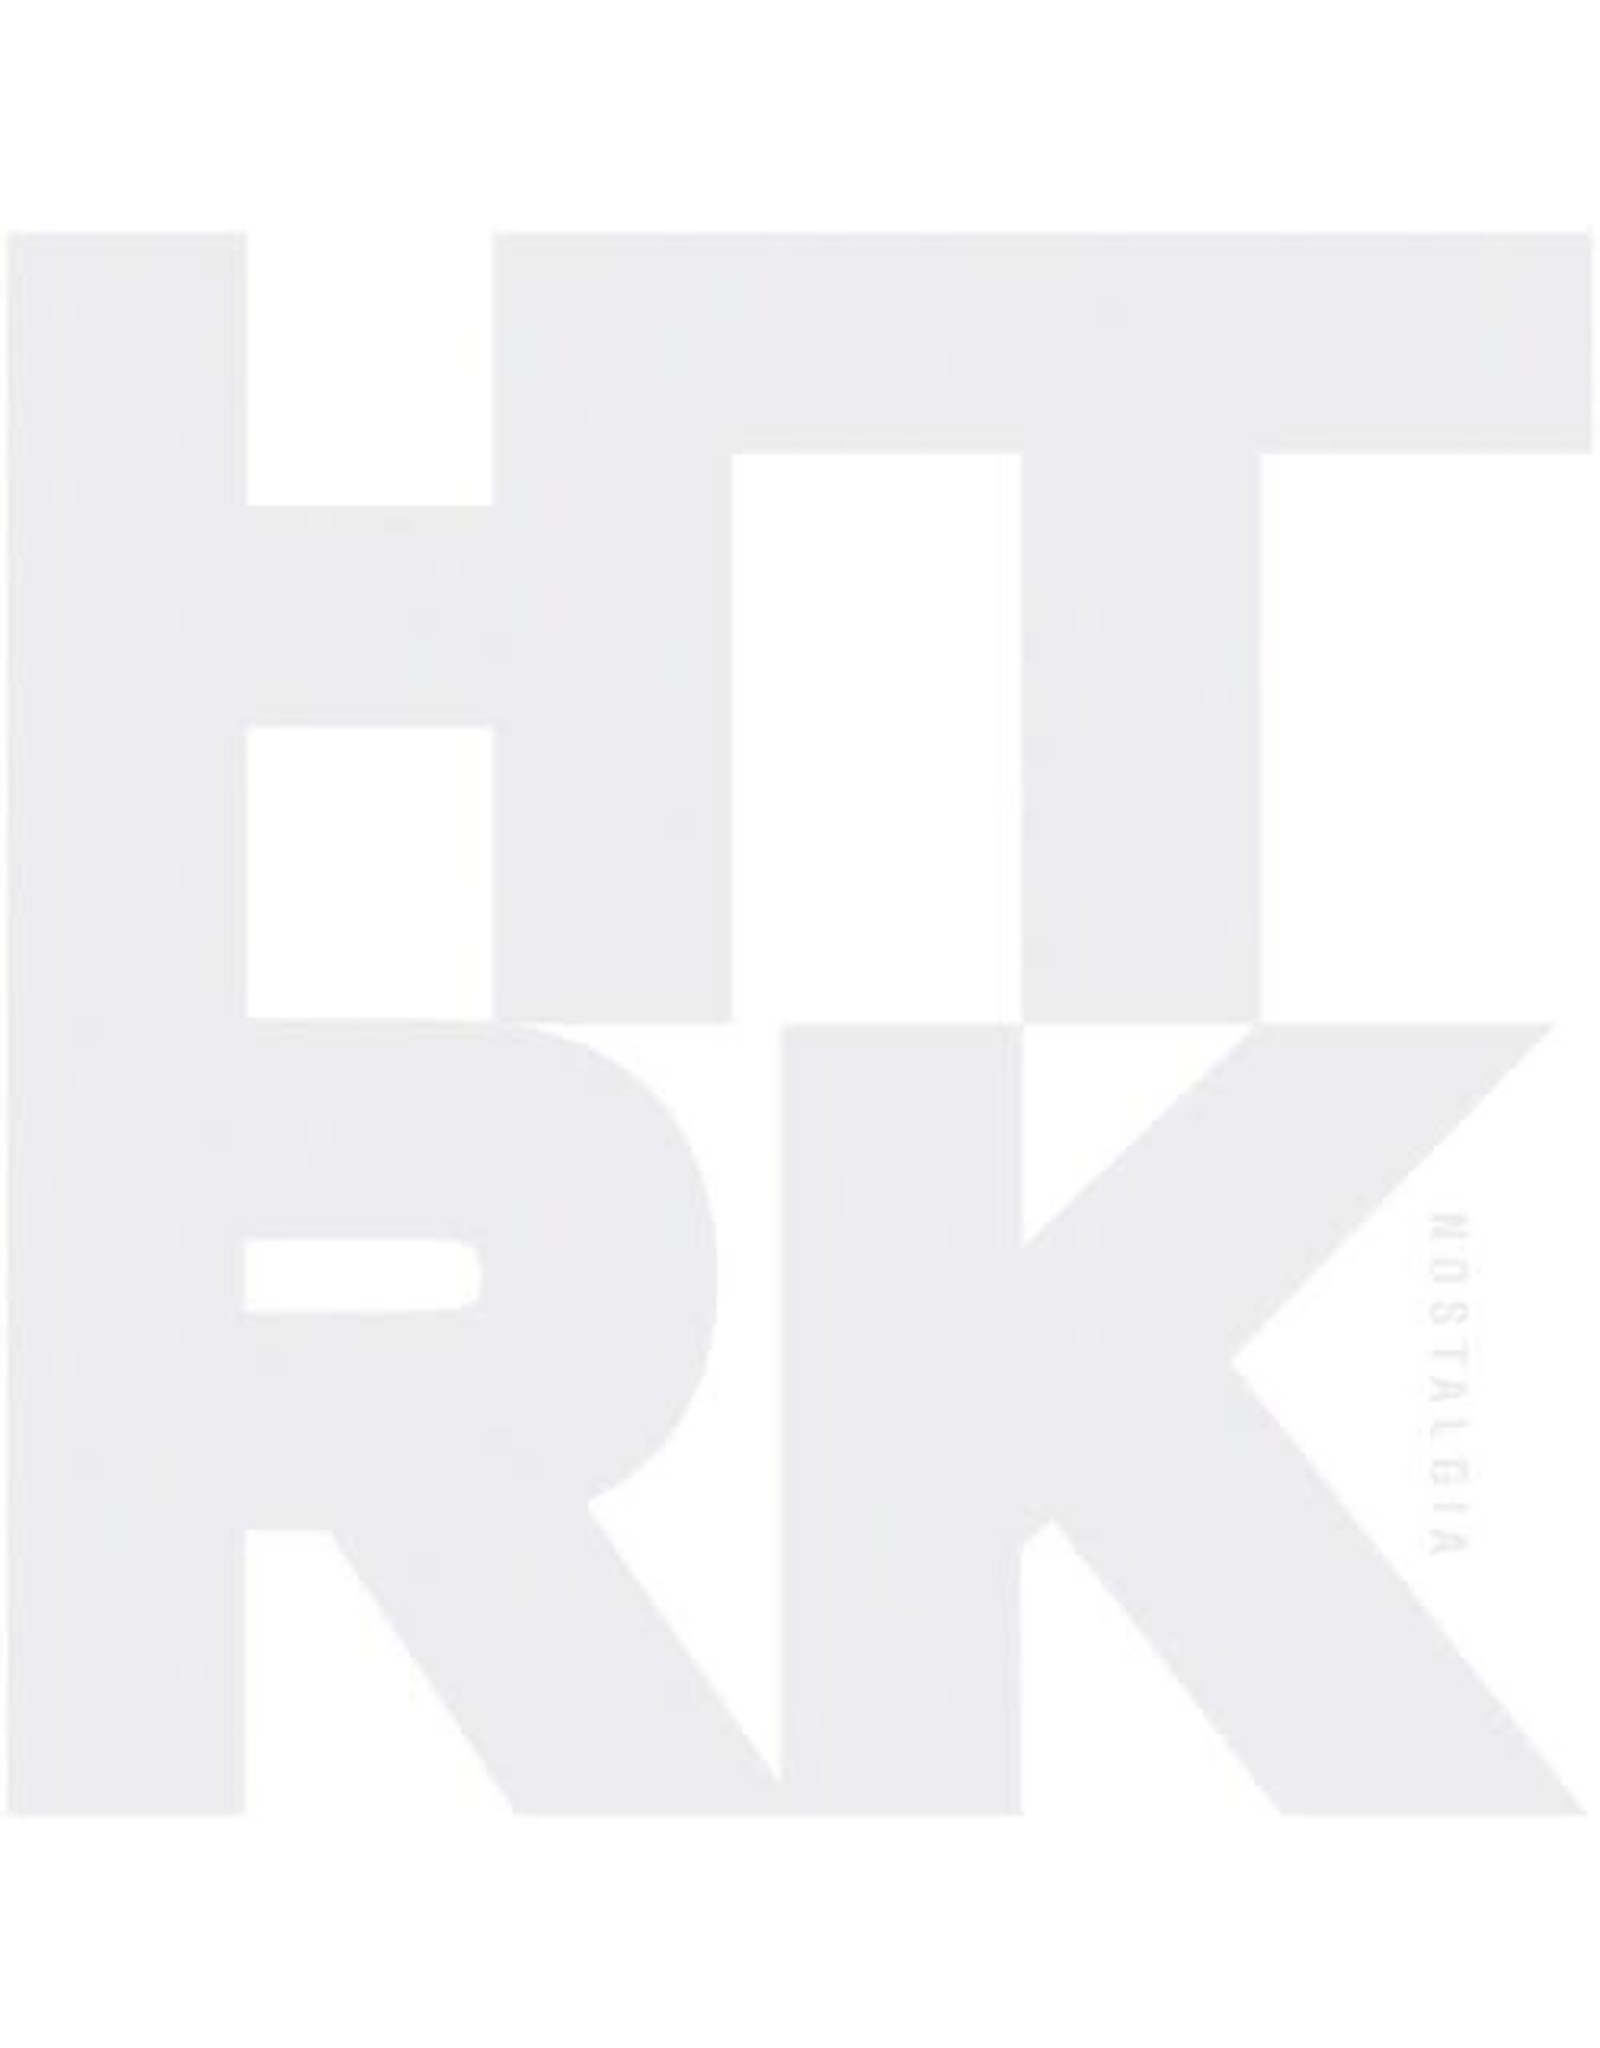 New Vinyl HTRK - Nostalgia LP